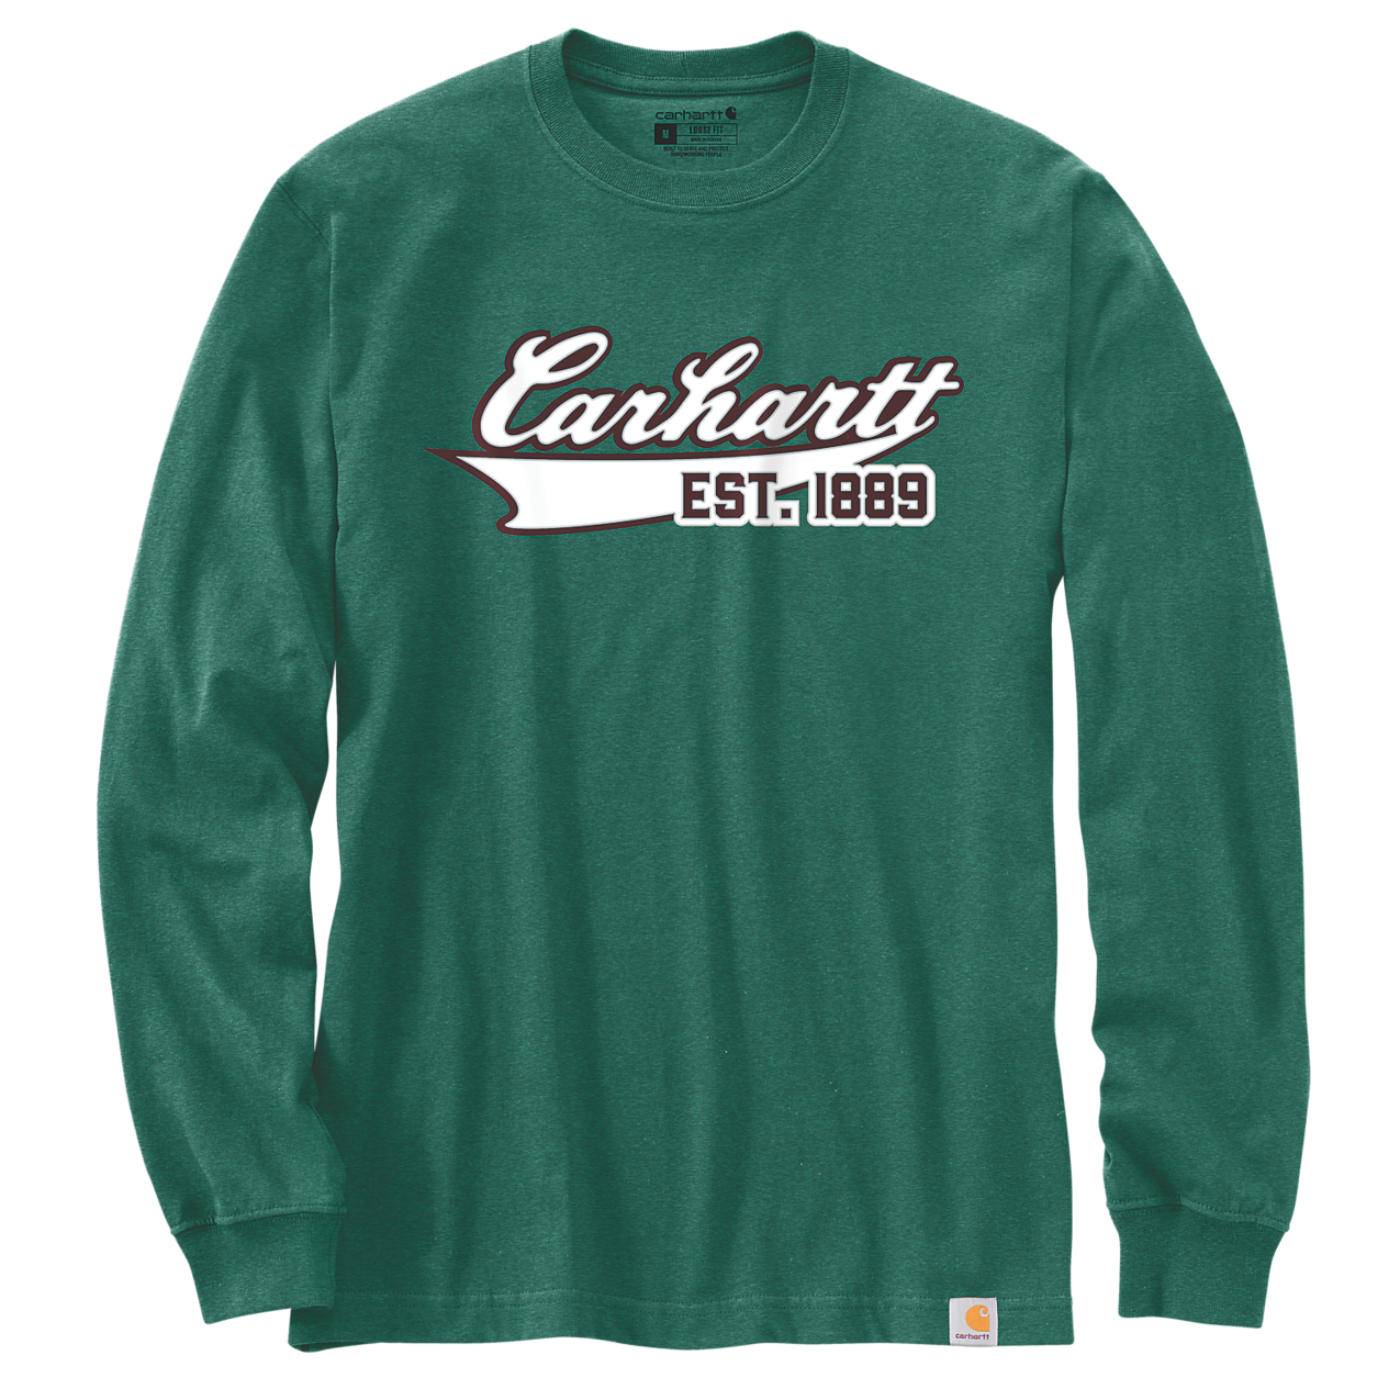 Script Graphic Carhartt Sweater